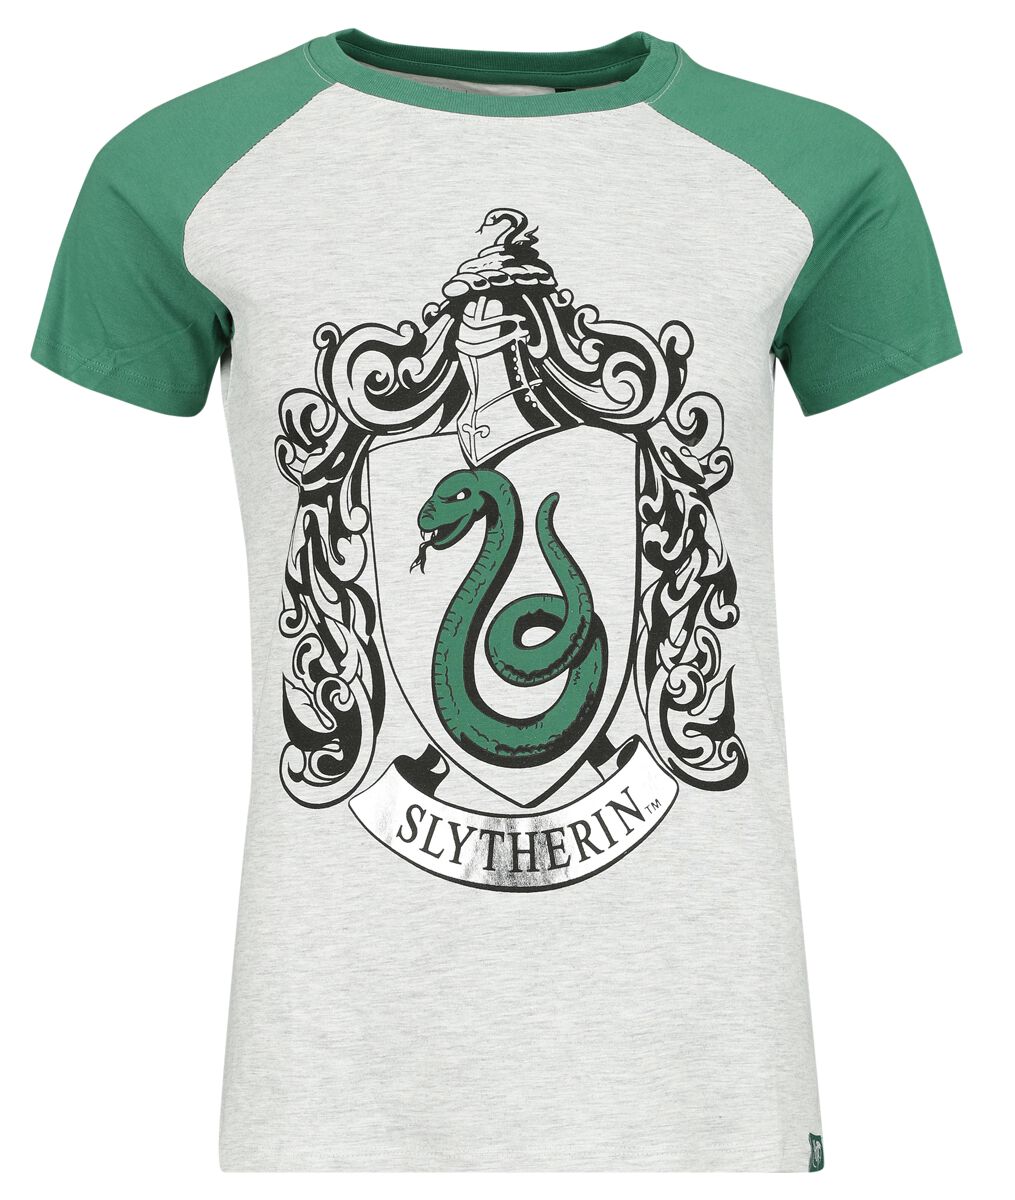 Harry Potter Slytherin Silver T-Shirt grün grau in M